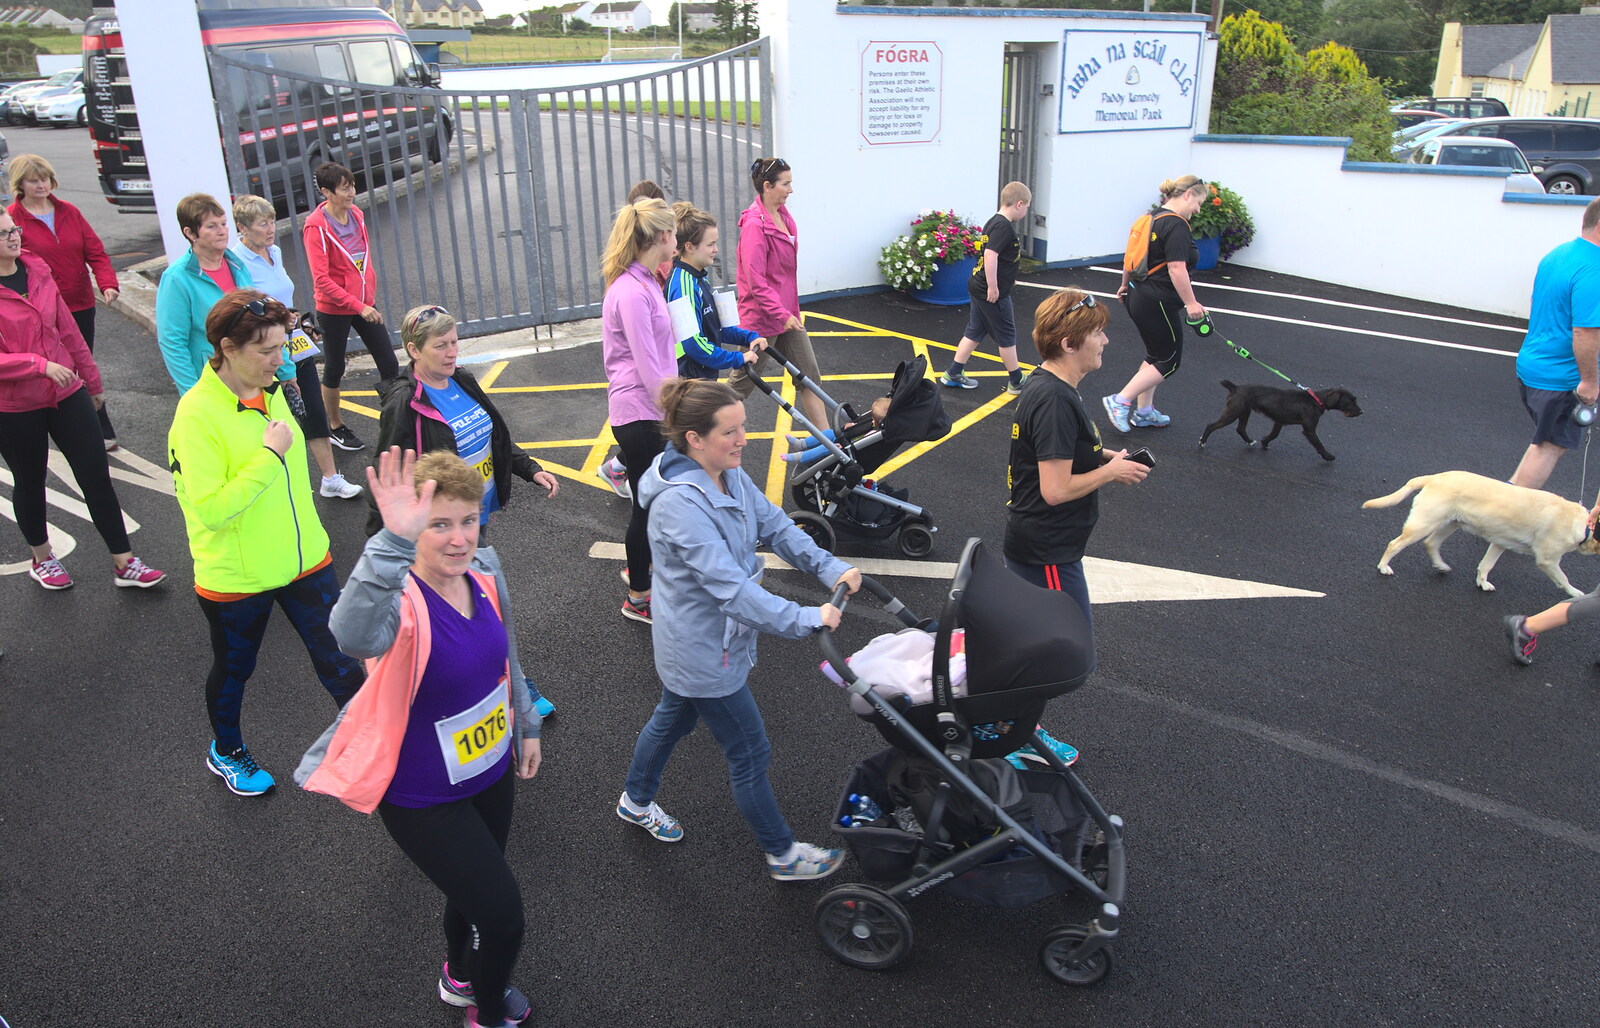 Finally, the walking pushchairs pass the start line from The Annascaul 10k Run, Abha na Scáil, Kerry, Ireland - 5th August 2017